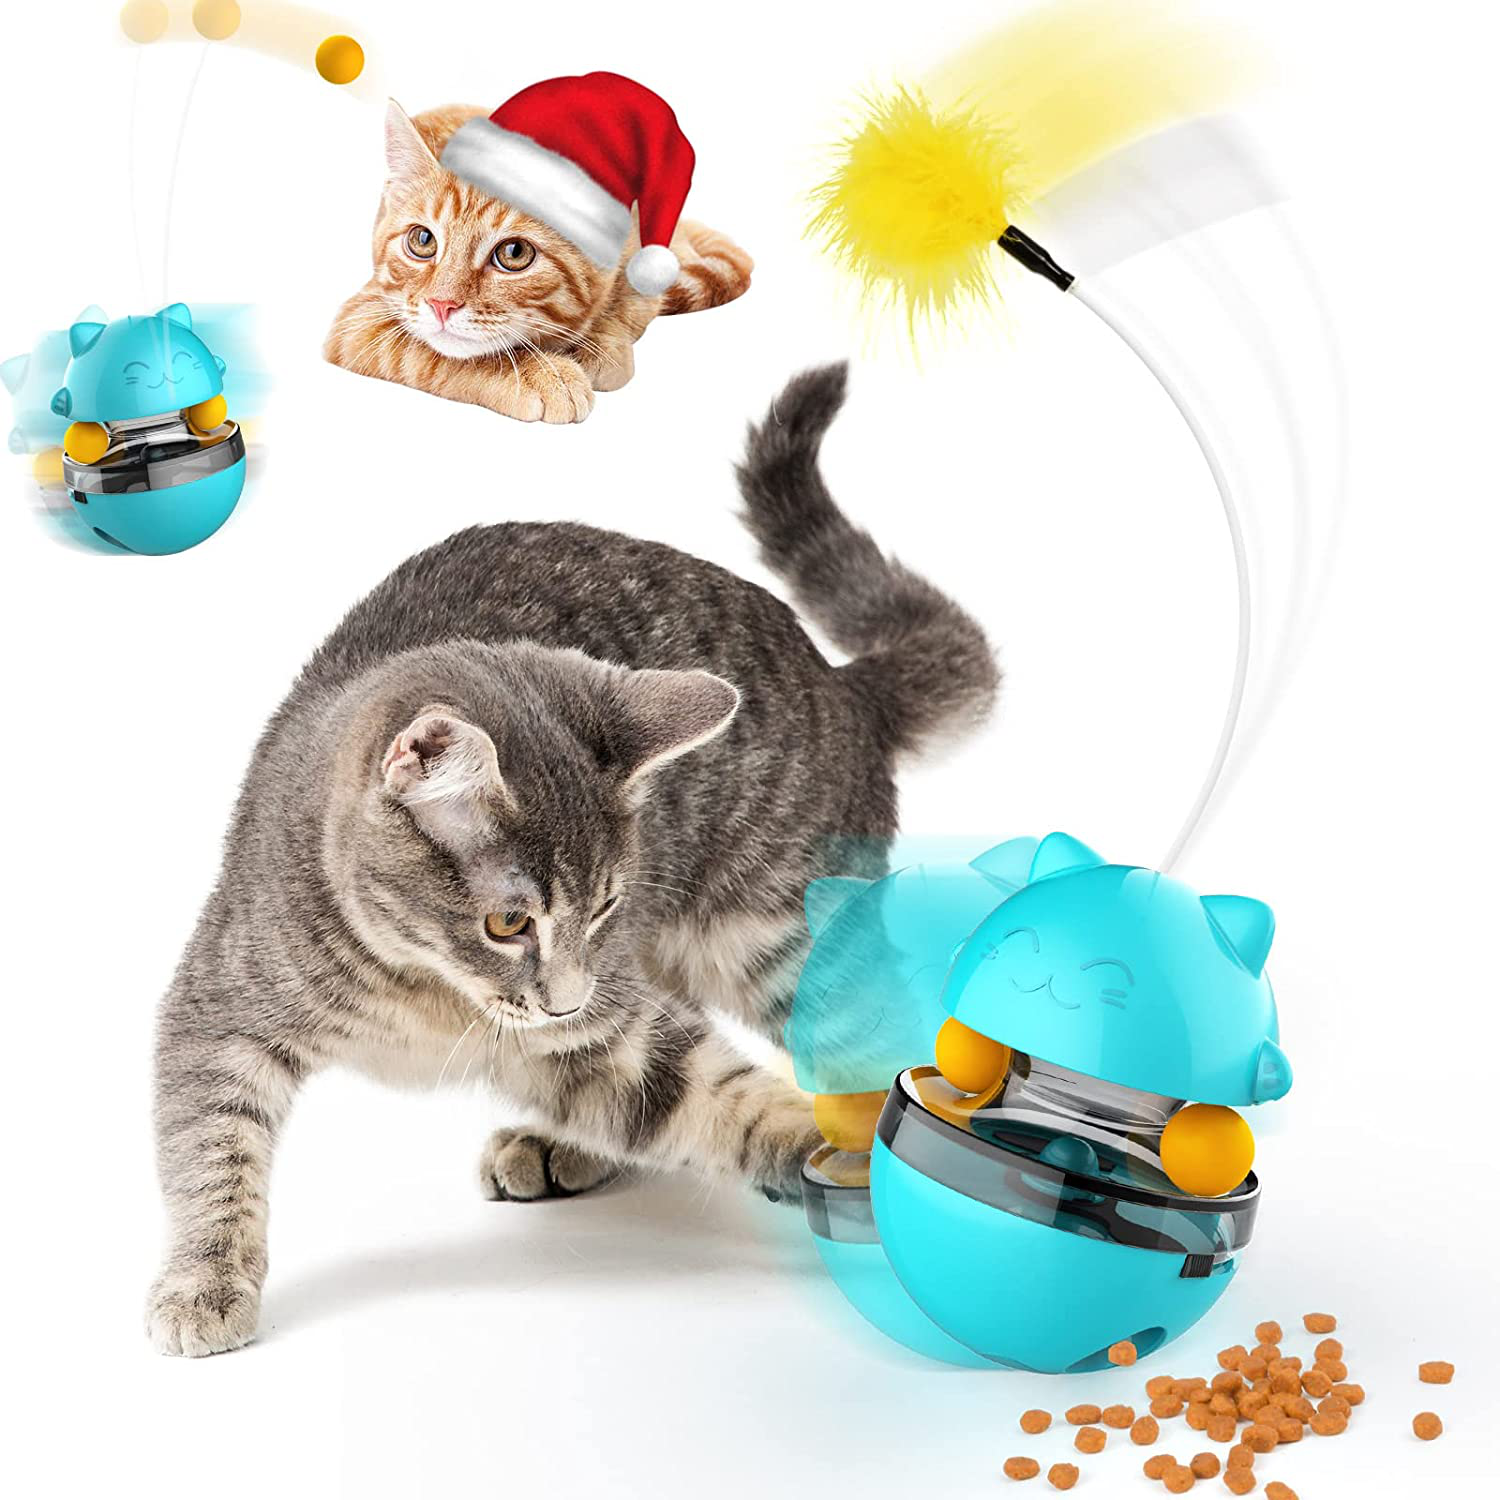 2Pcs Cat Treat Ball Funny Pet Food Leakage Ball Interactive Kitten